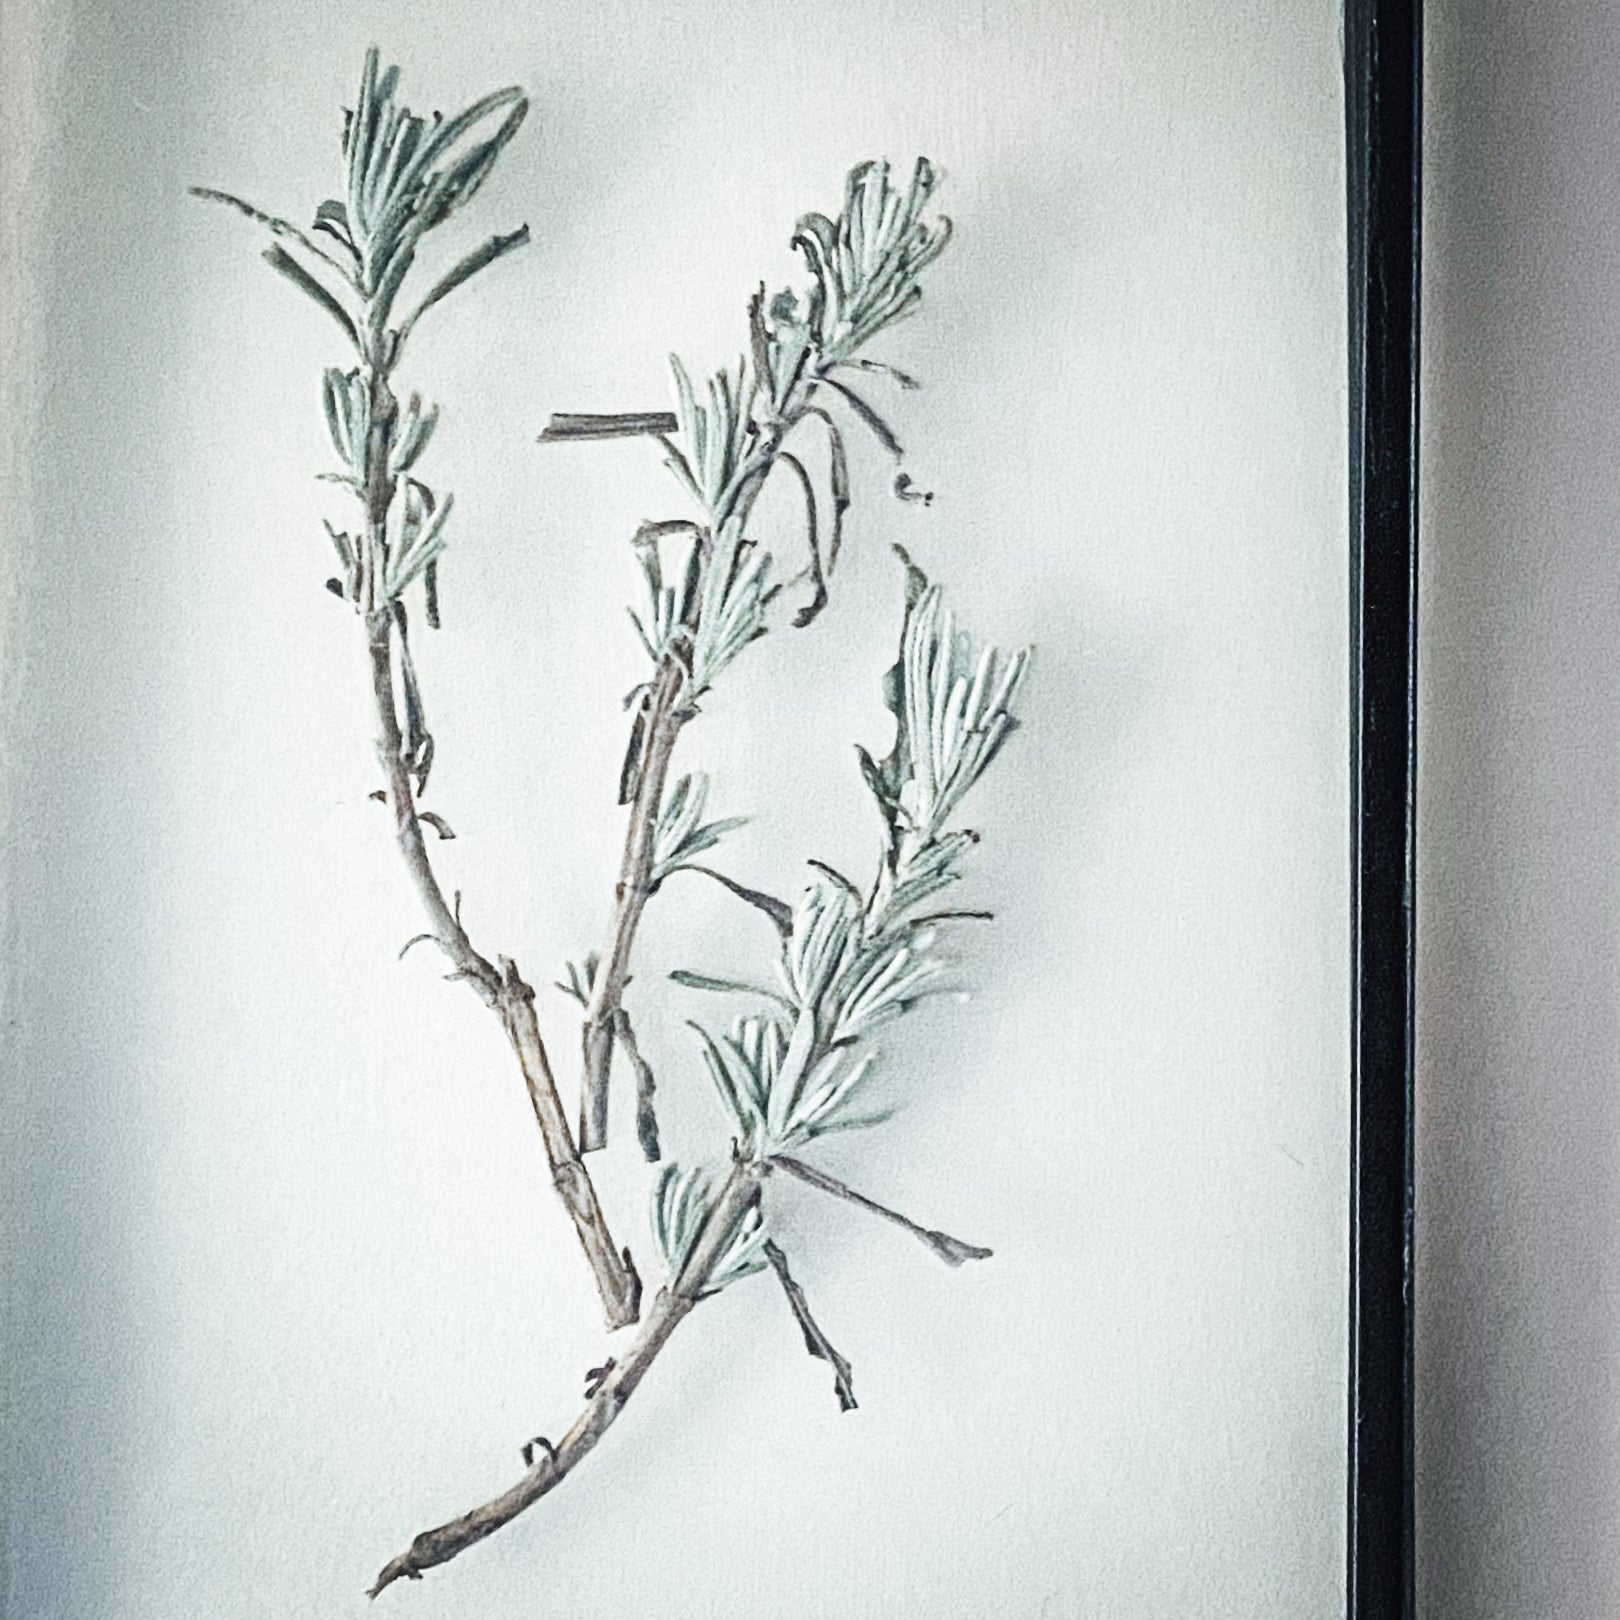 Black Antique Pressed Flower Frame: Dried Lavender Leaves - Small